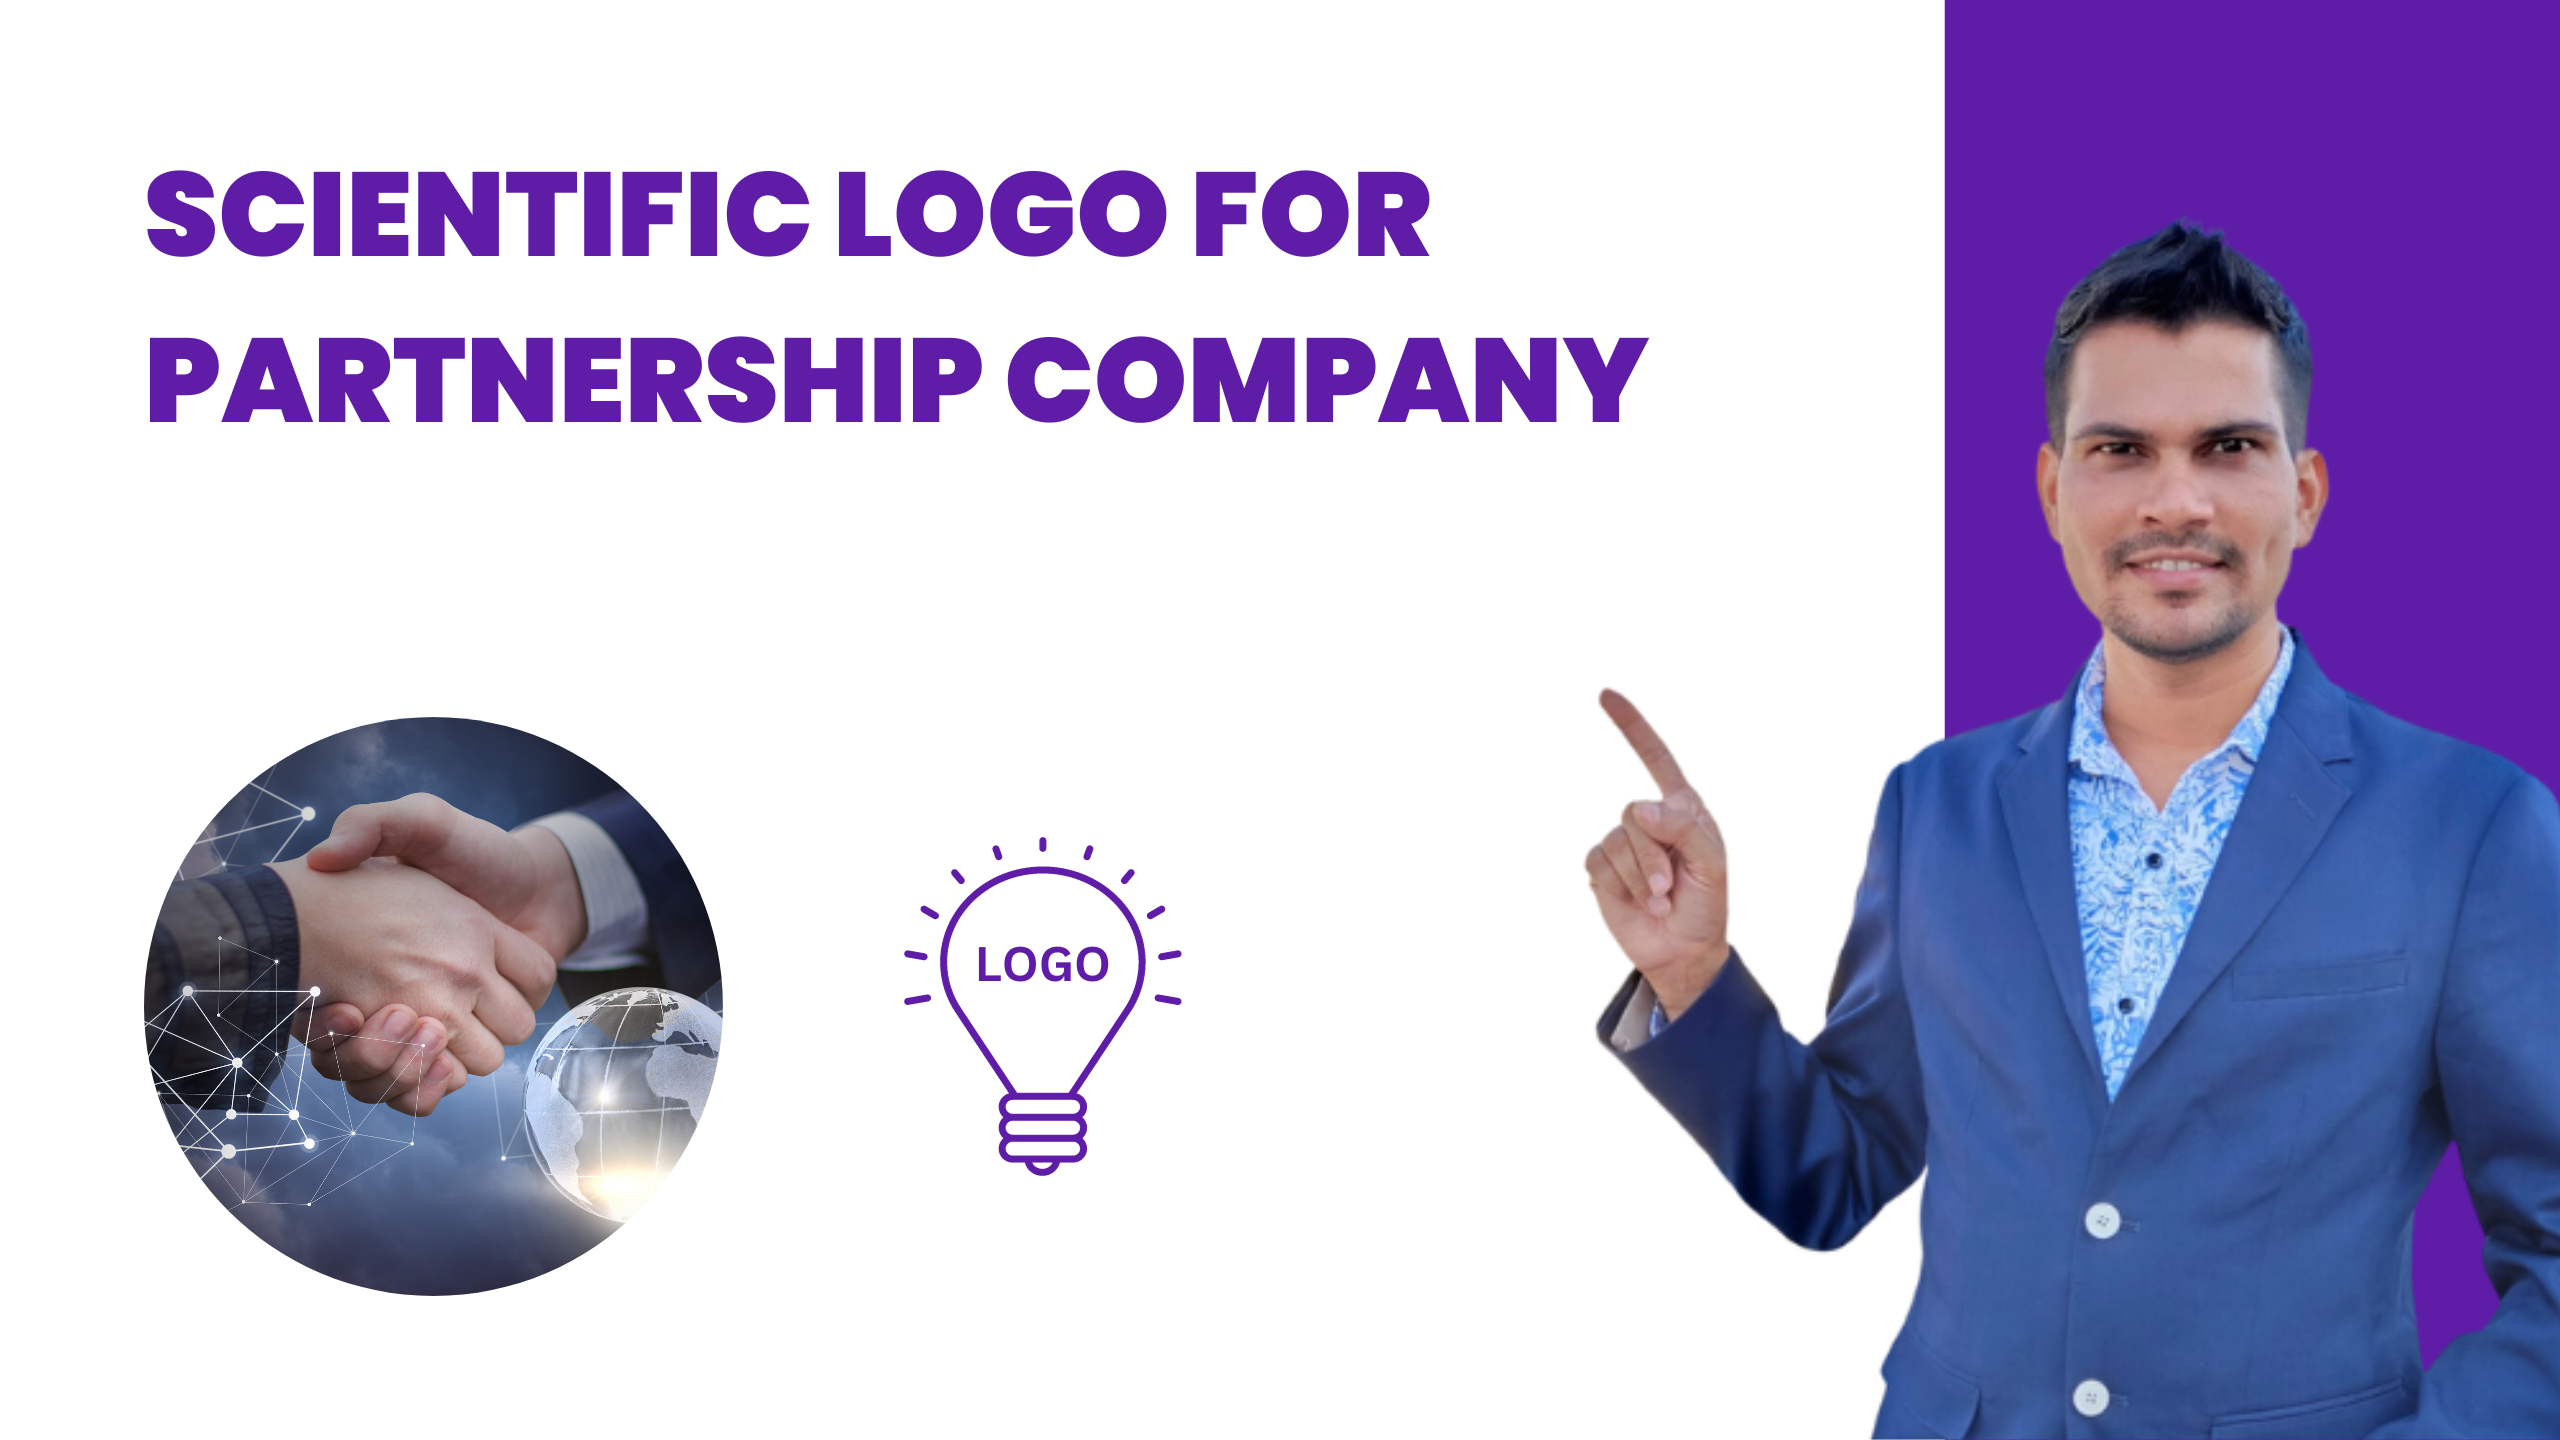 Partnership Company Scientific Logo by Subhash